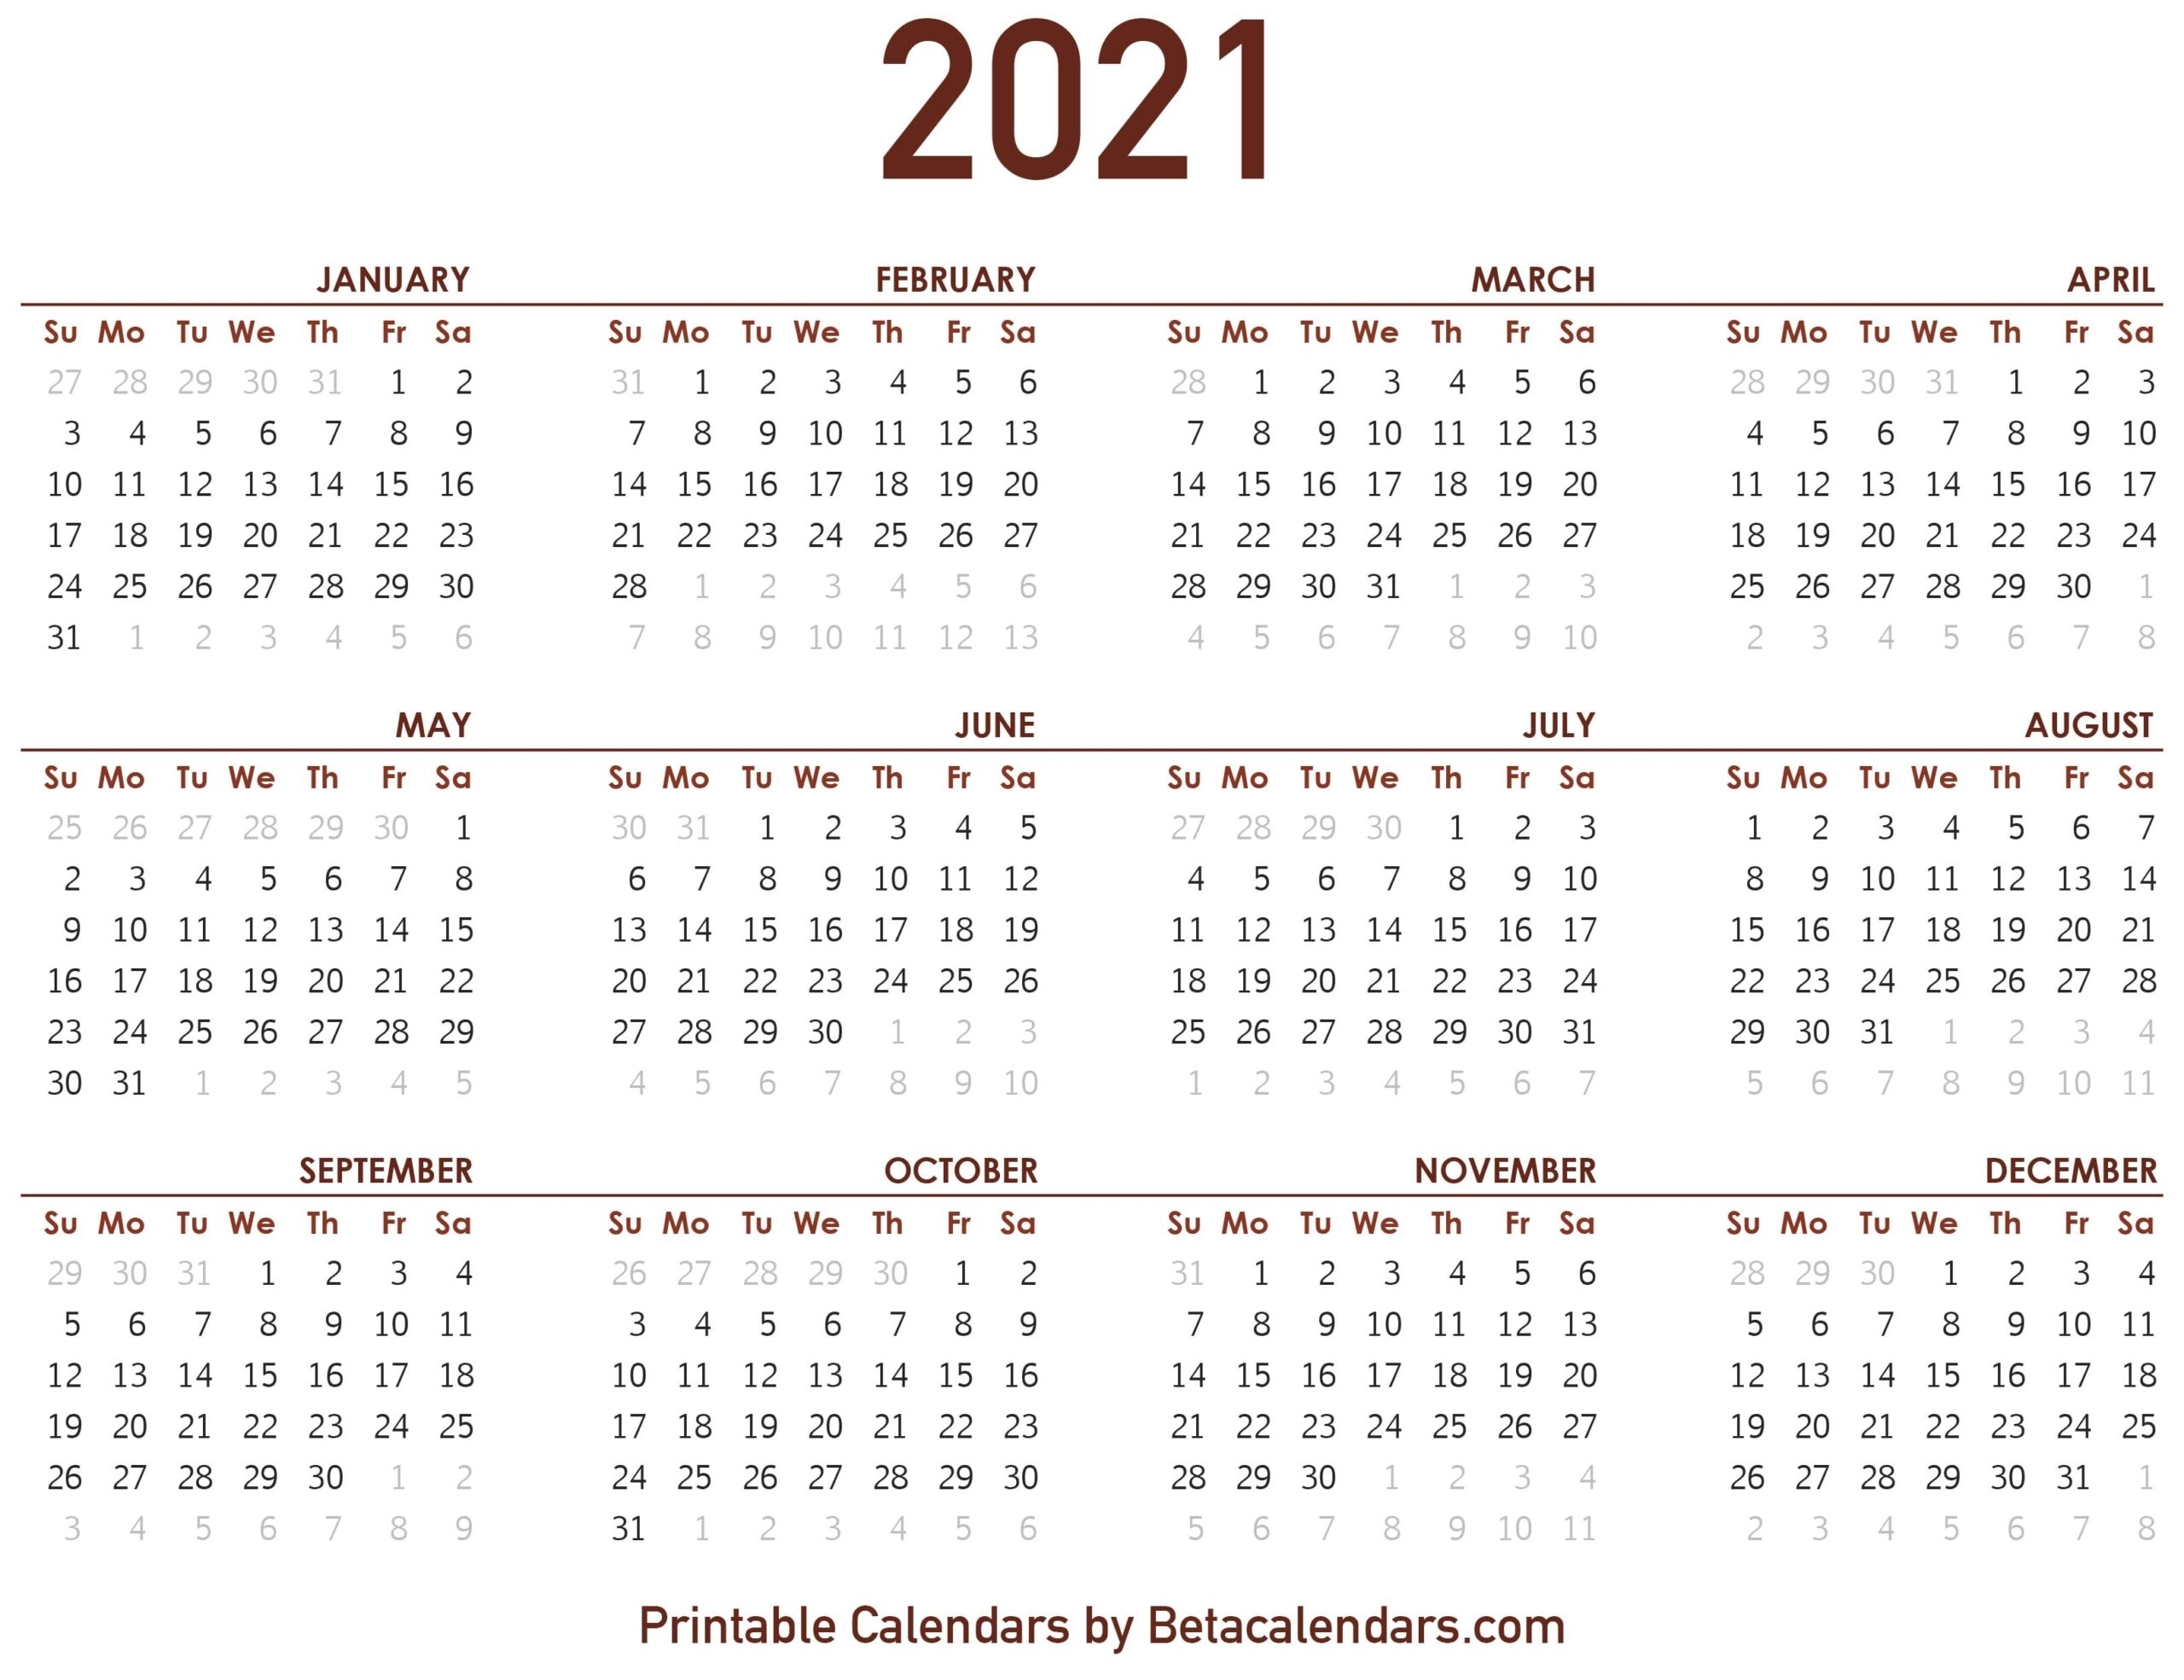 2021 28 Day Expiration Calendar Calendar Template 2021